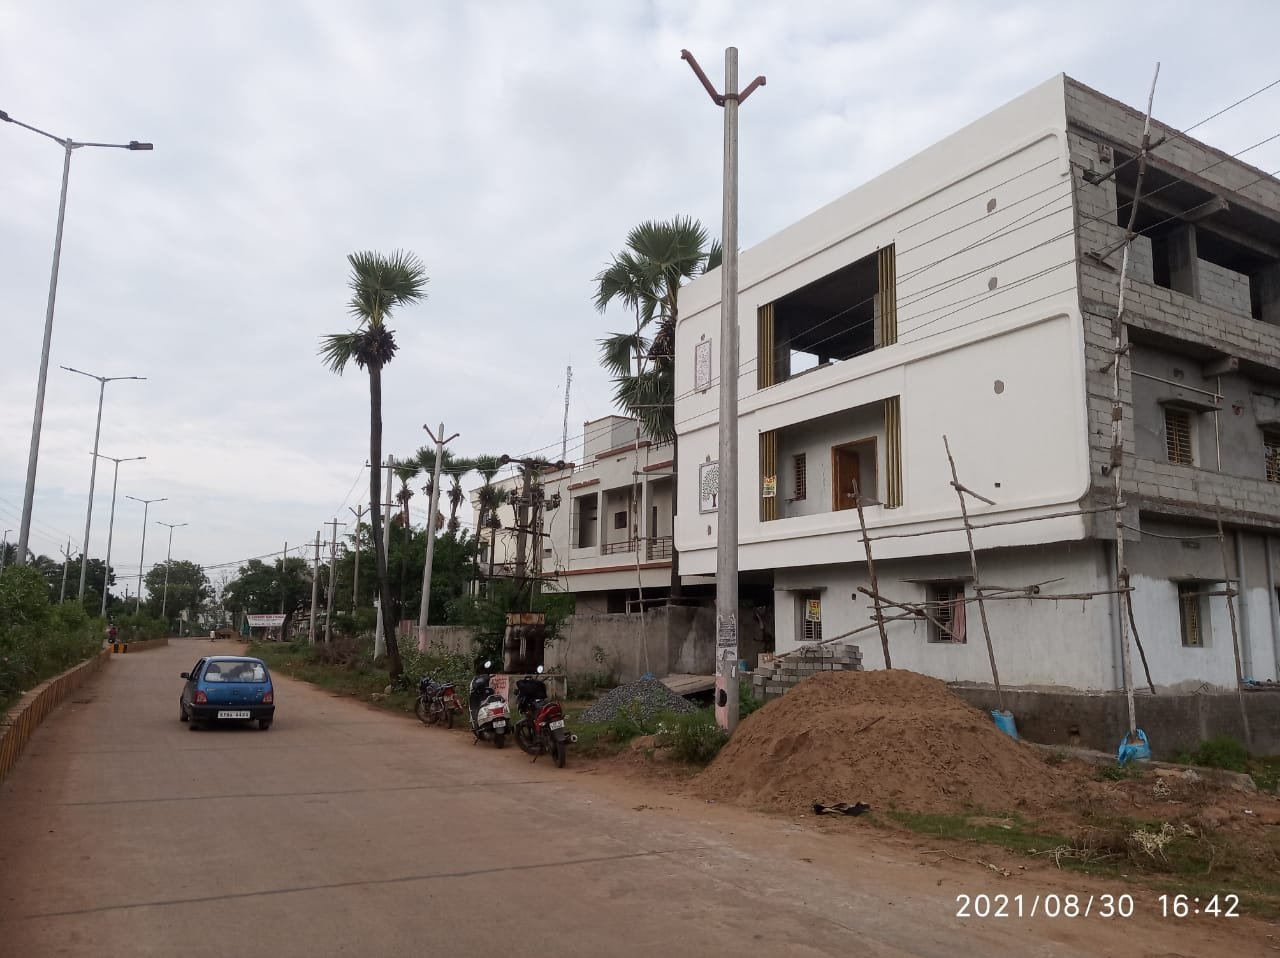 G +2 Commercial Building For Rent at Sasikanth Nagar, Kakinada